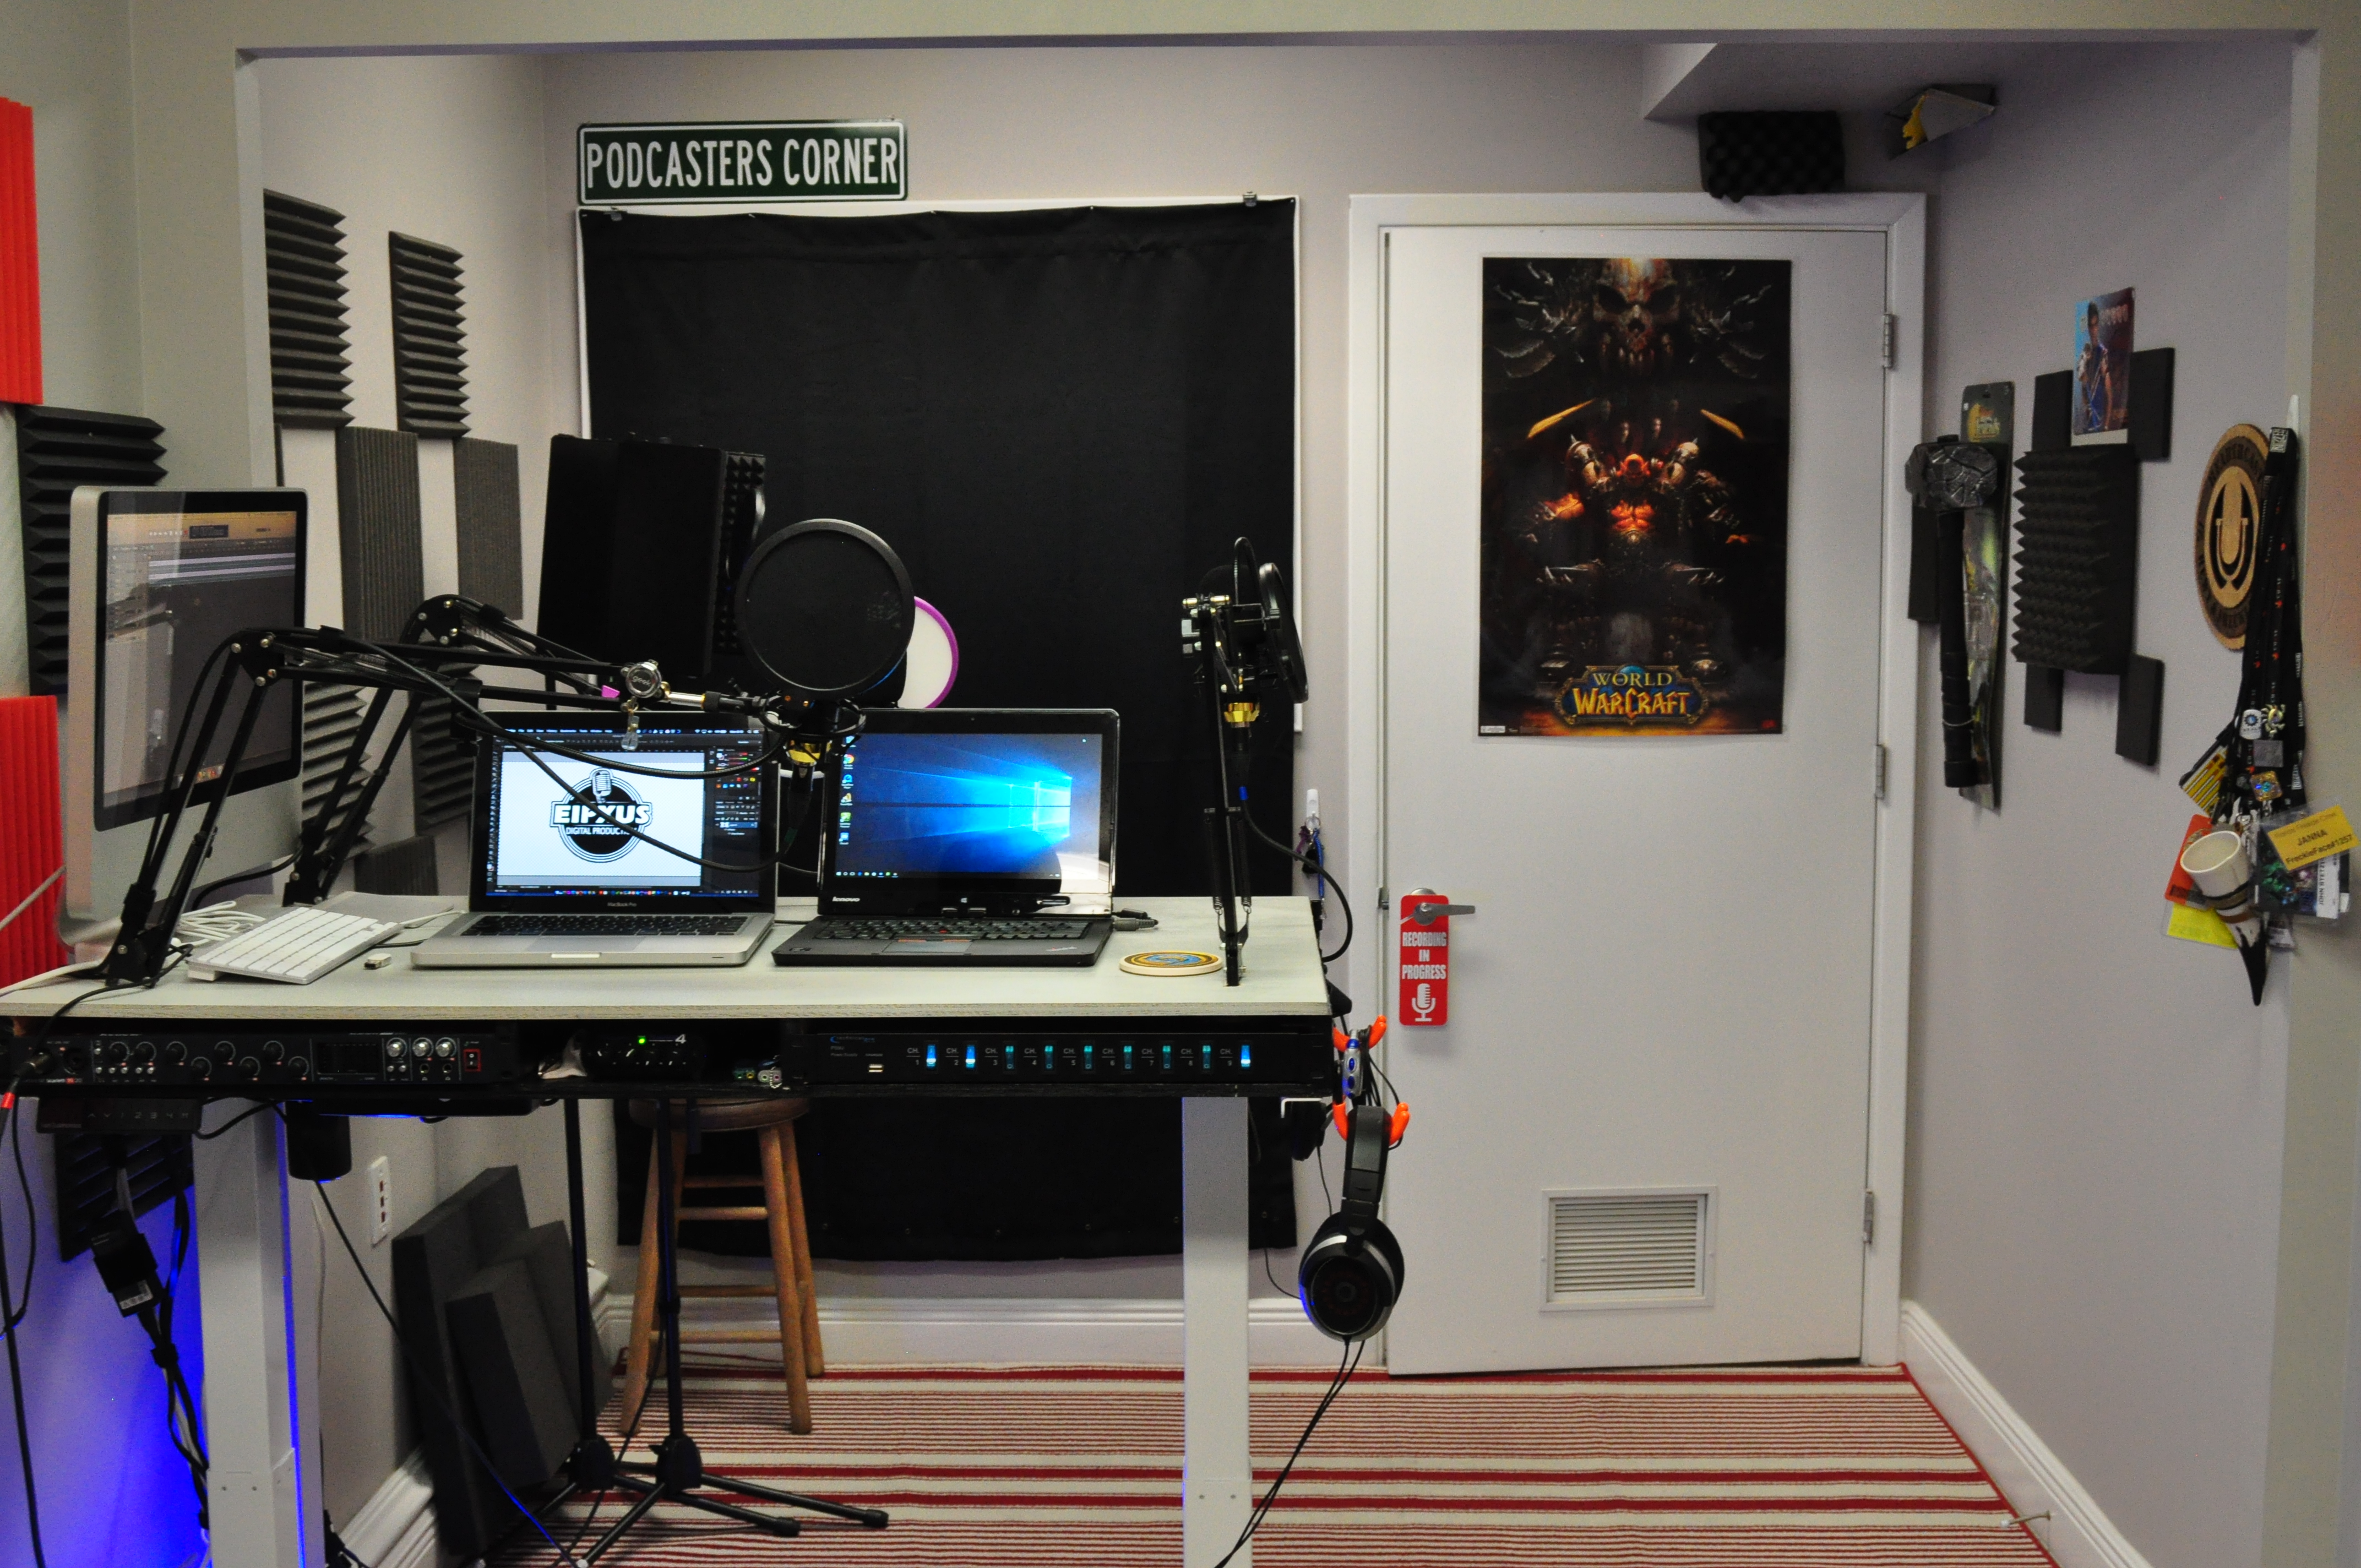 More of the Studio